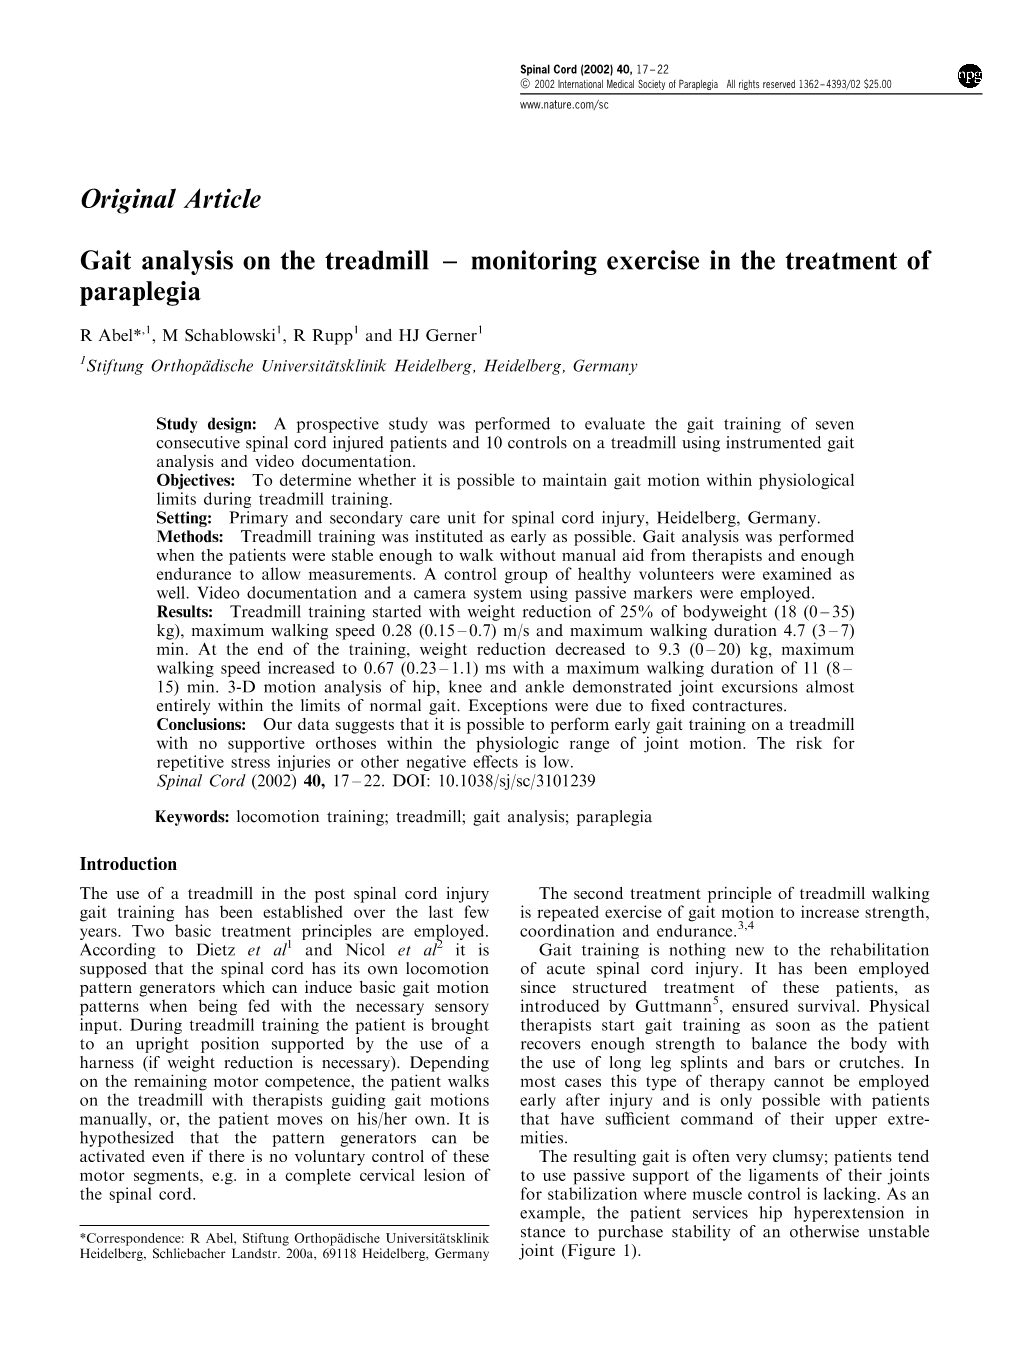 Original Article Gait Analysis on the Treadmill ± Monitoring Exercise in the Treatment of Paraplegia